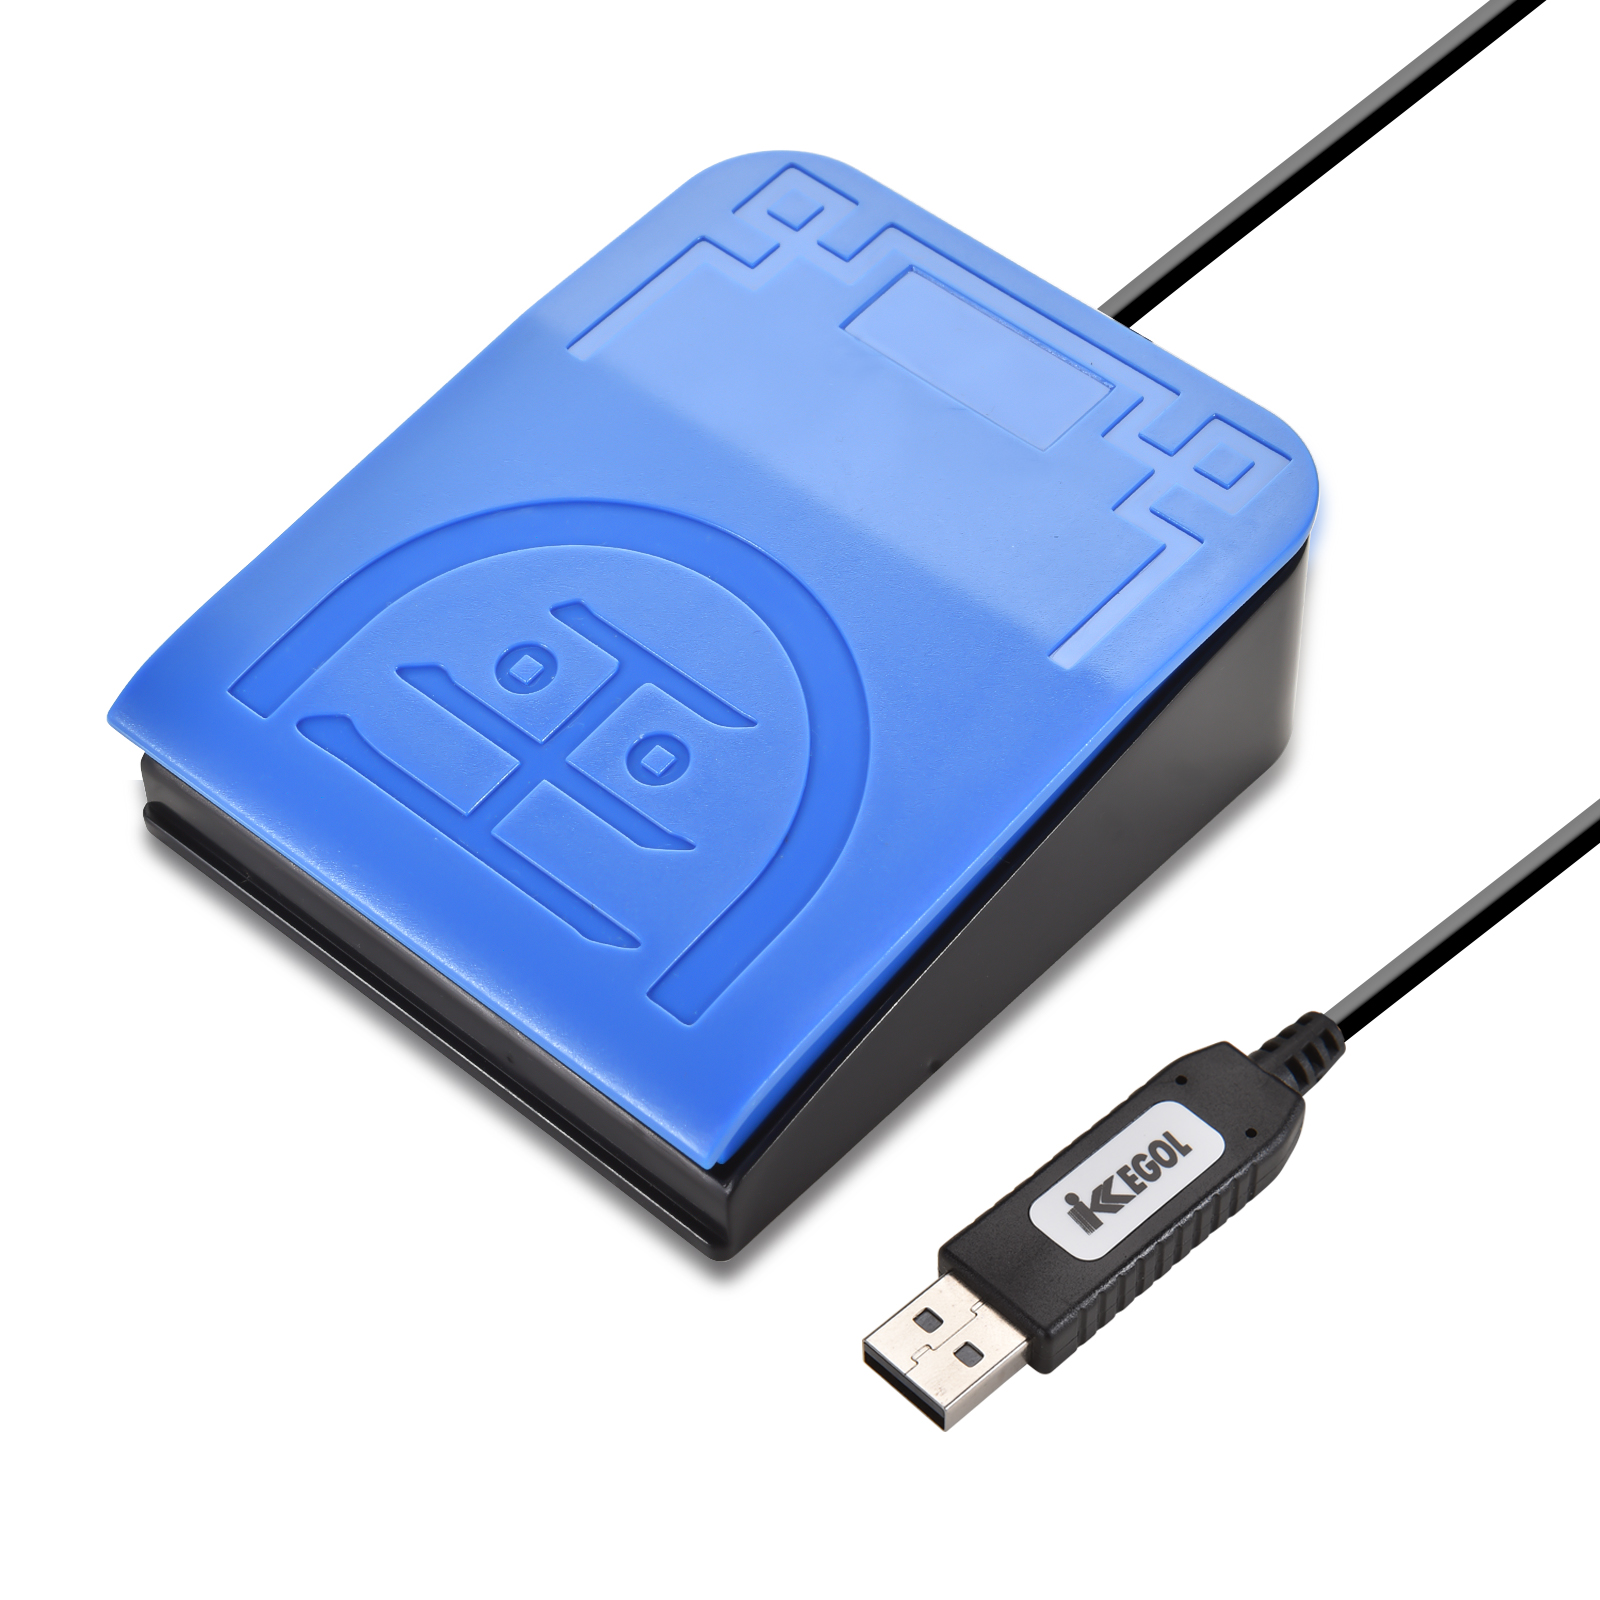 iKKEGOL Upgraded USB Single Foot Optics Blue Pedal Switch - Click Image to Close